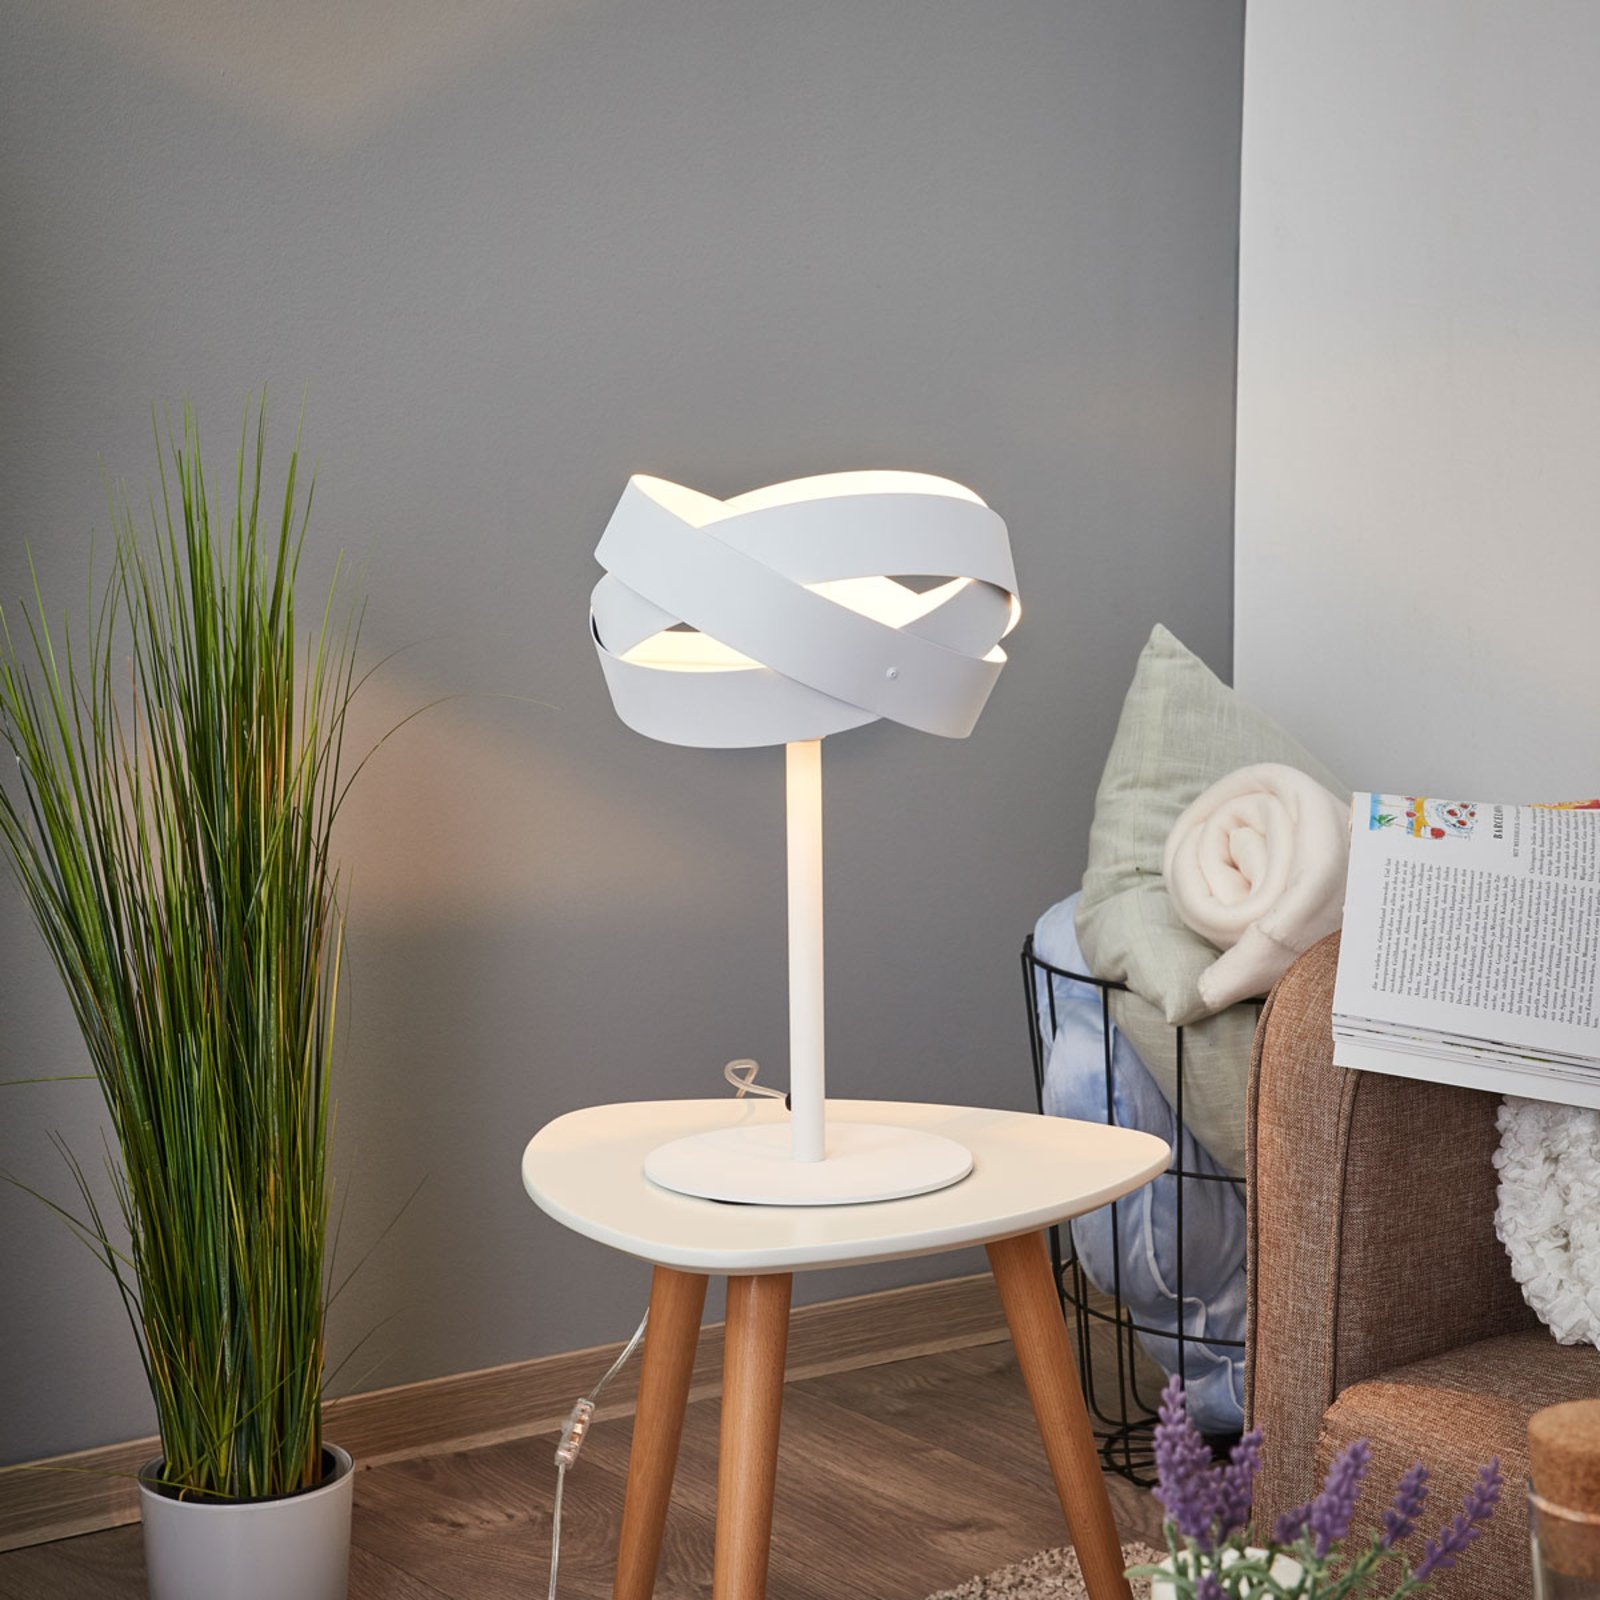 Tornado - attractively design table lamp